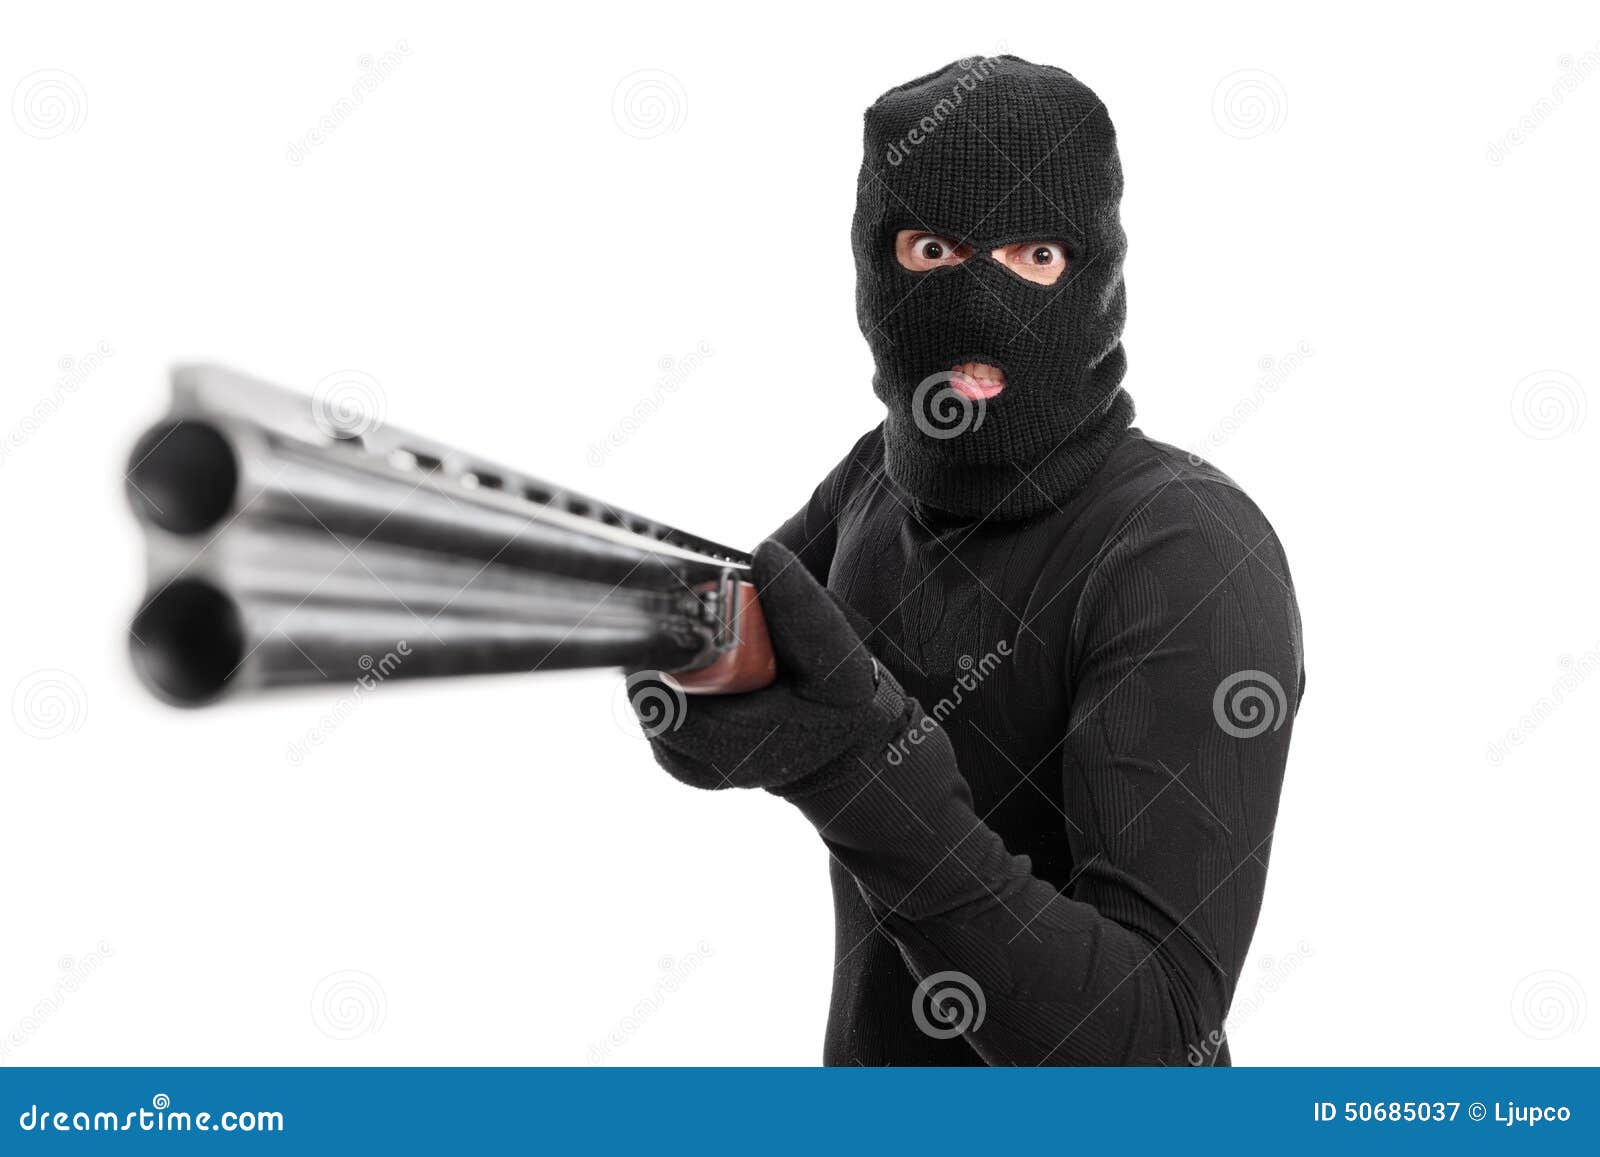 angry-criminal-pointing-shotgun-camera-isolated-white-background-50685037.jpg